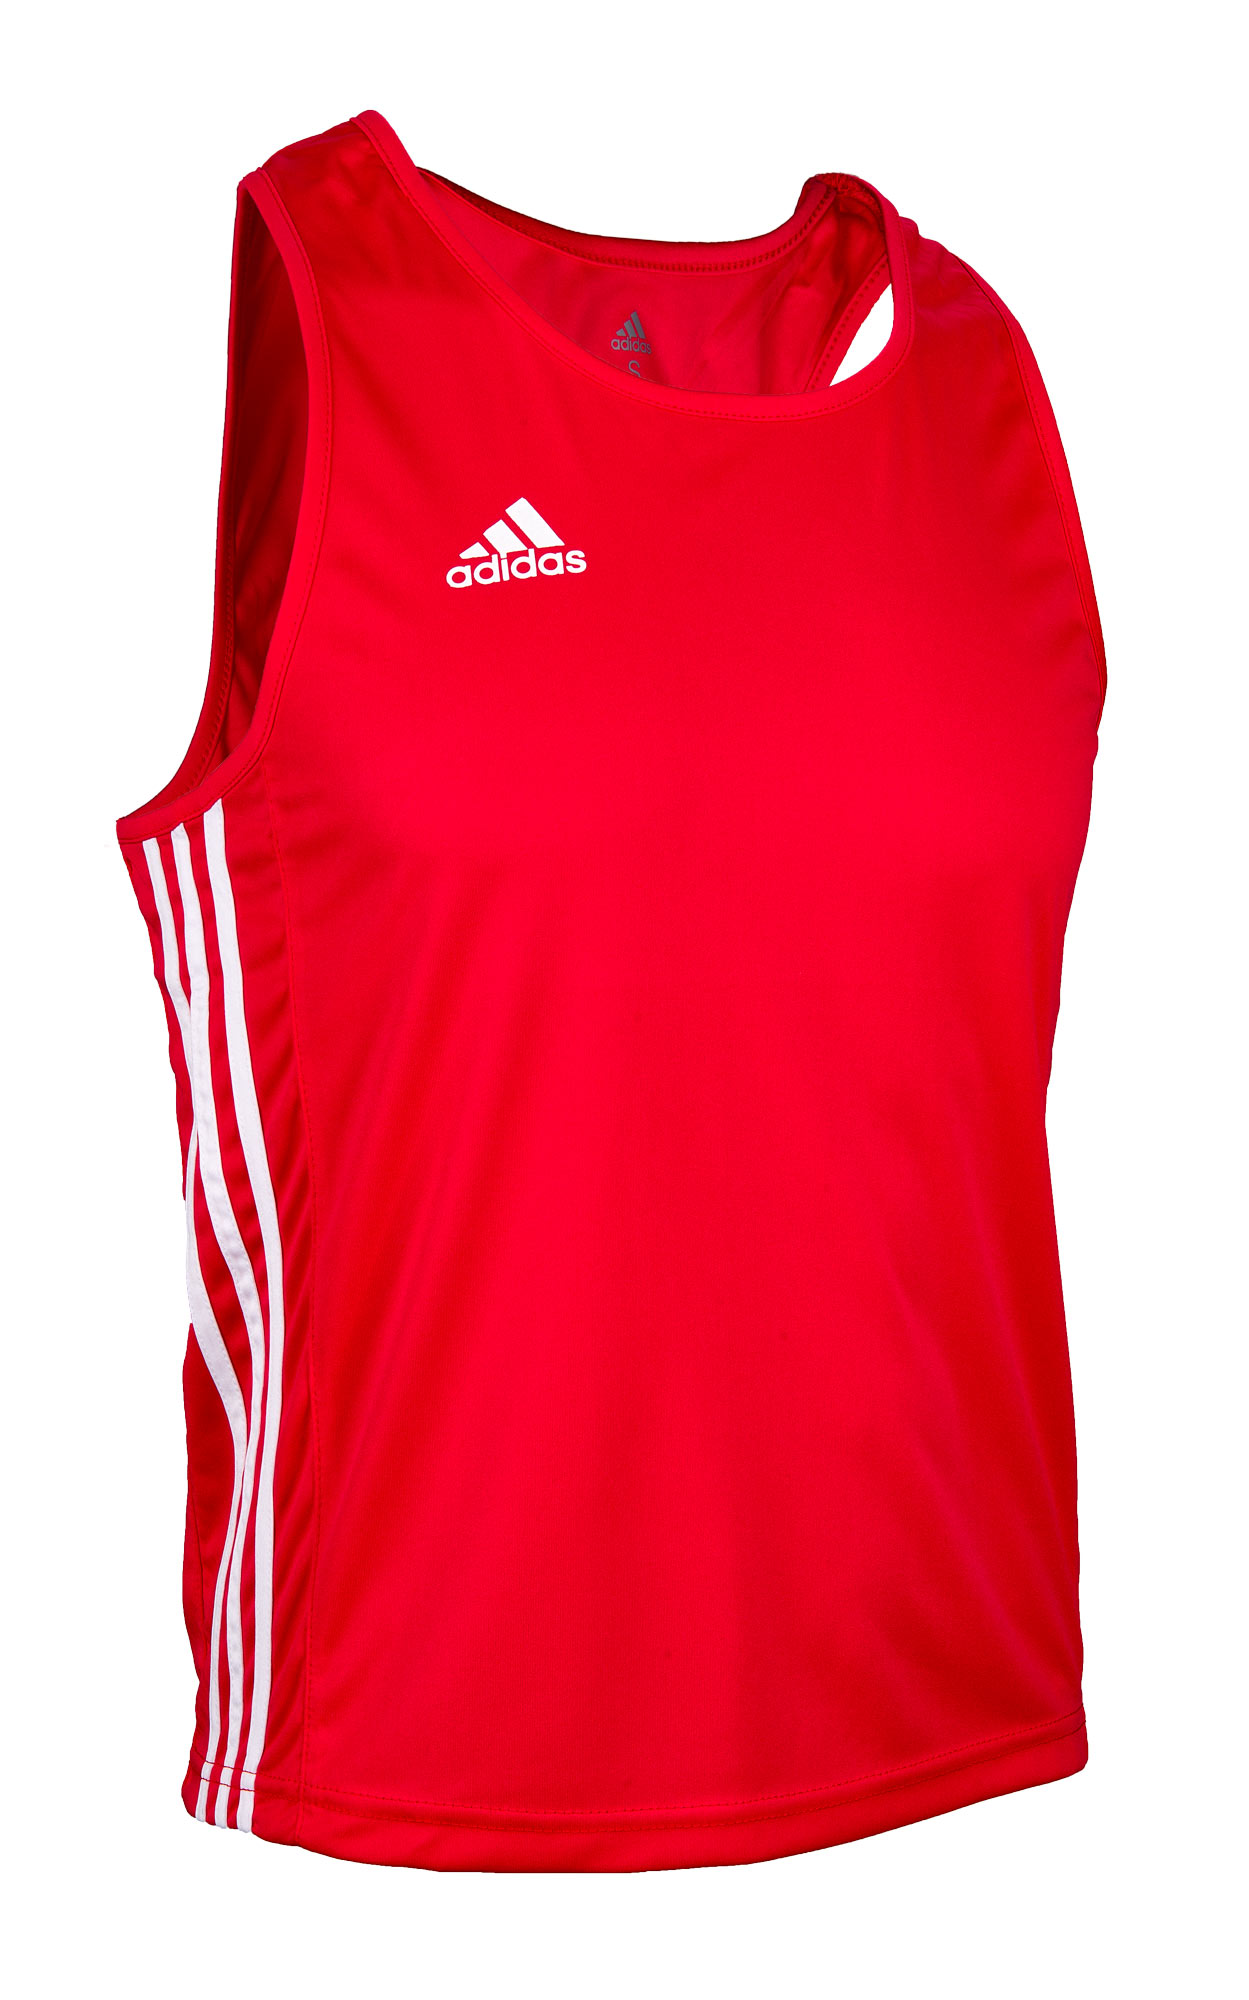 adidas boxing vest ADIBTT02 red